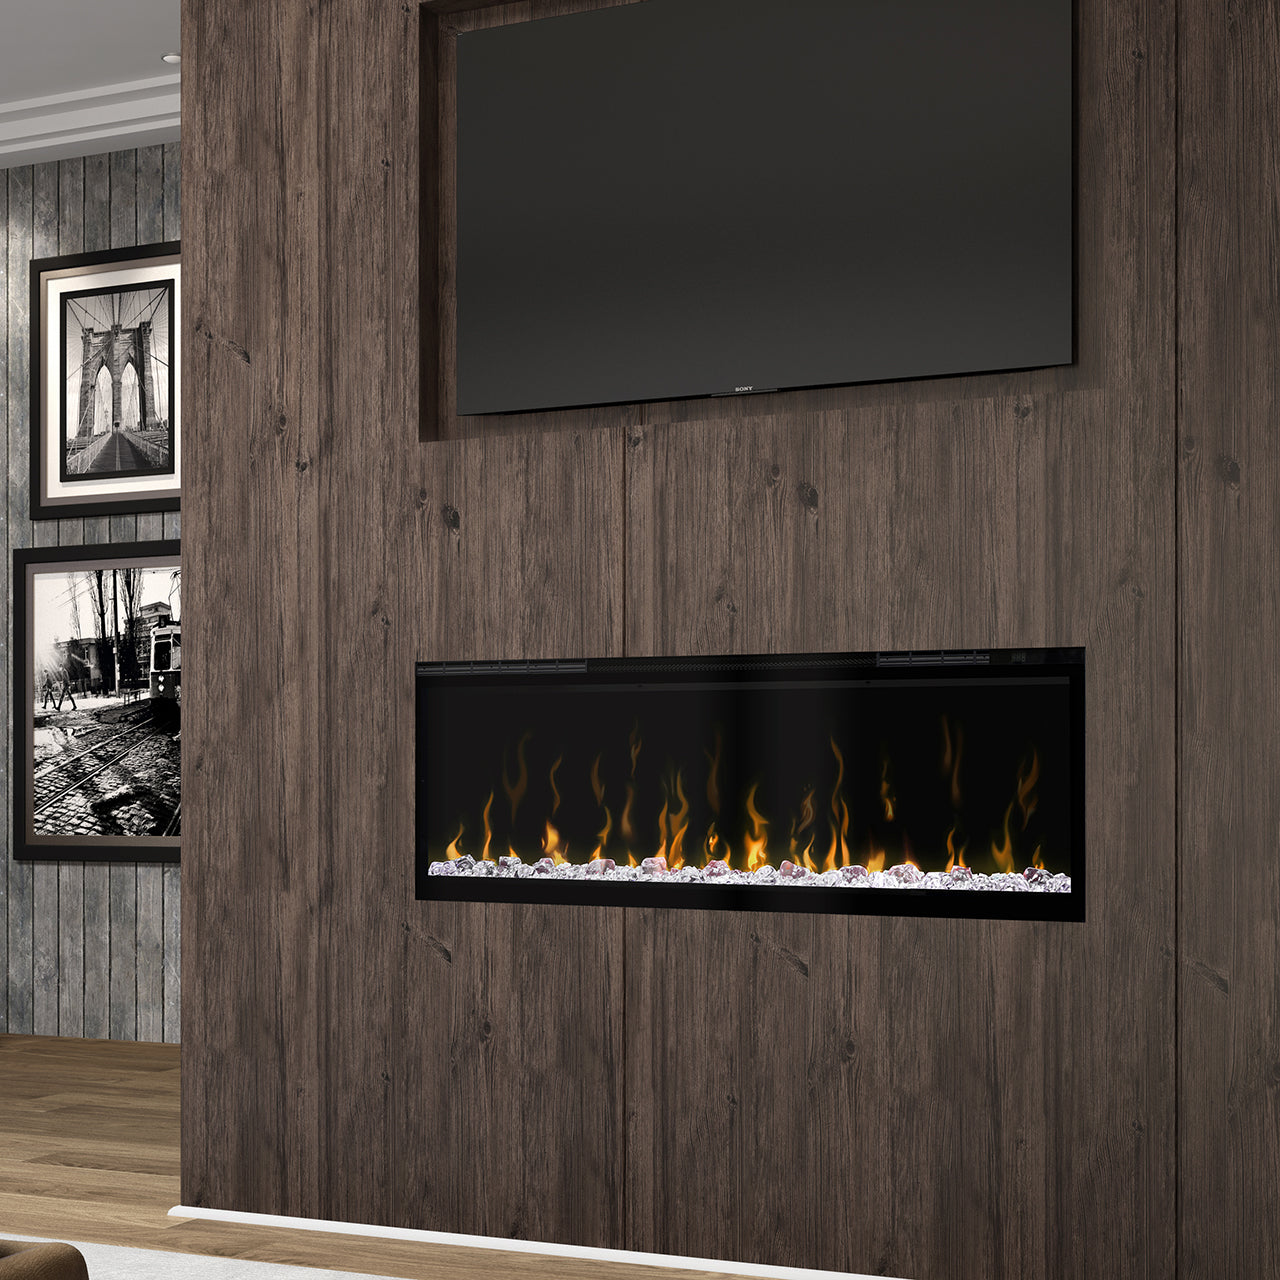 Dimplex IgniteXL 50 Inch Linear Electric Fireplace